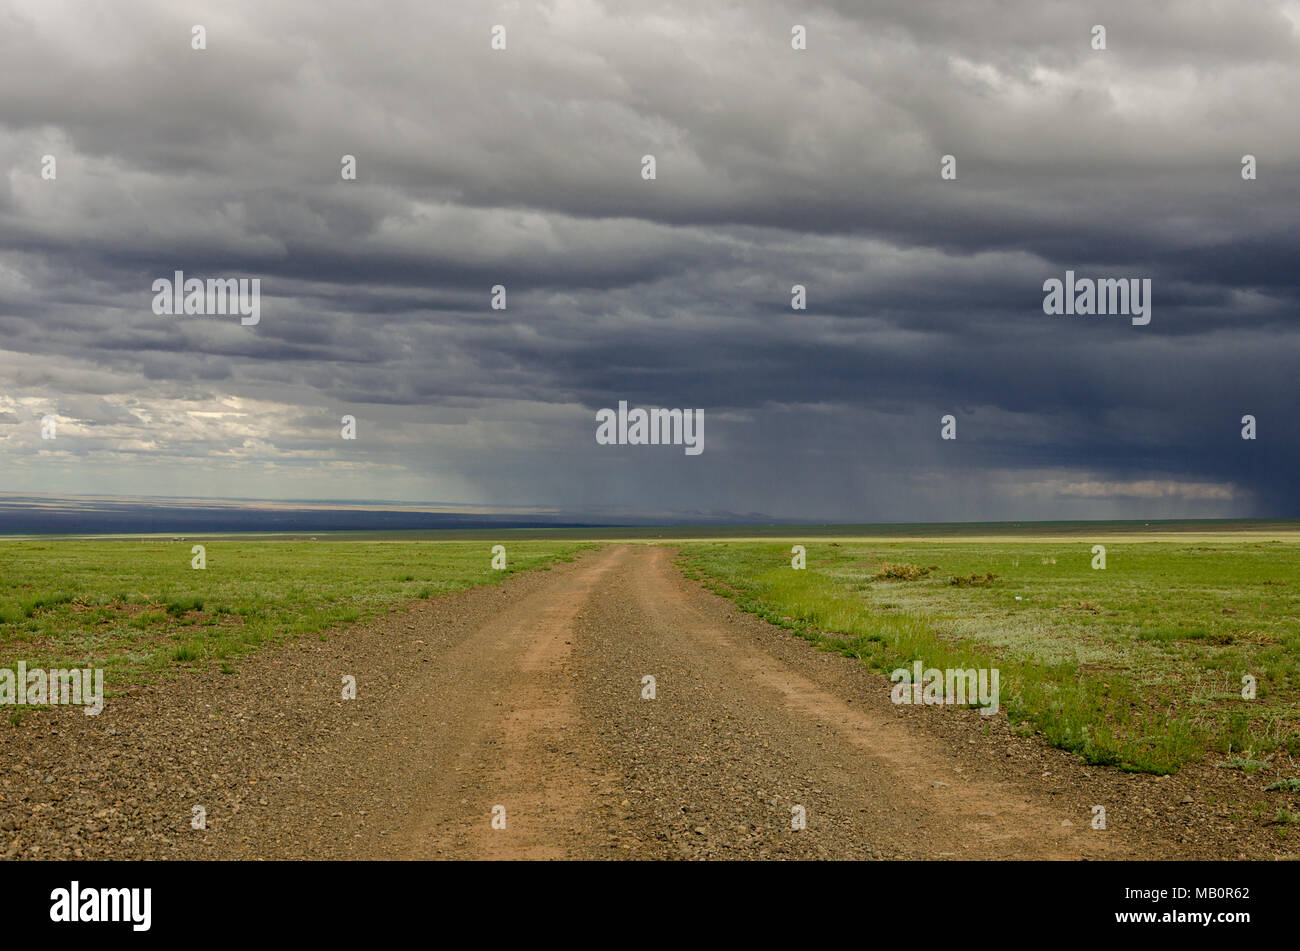 A Road in the Gobi Desert, Mongolia Stock Photo